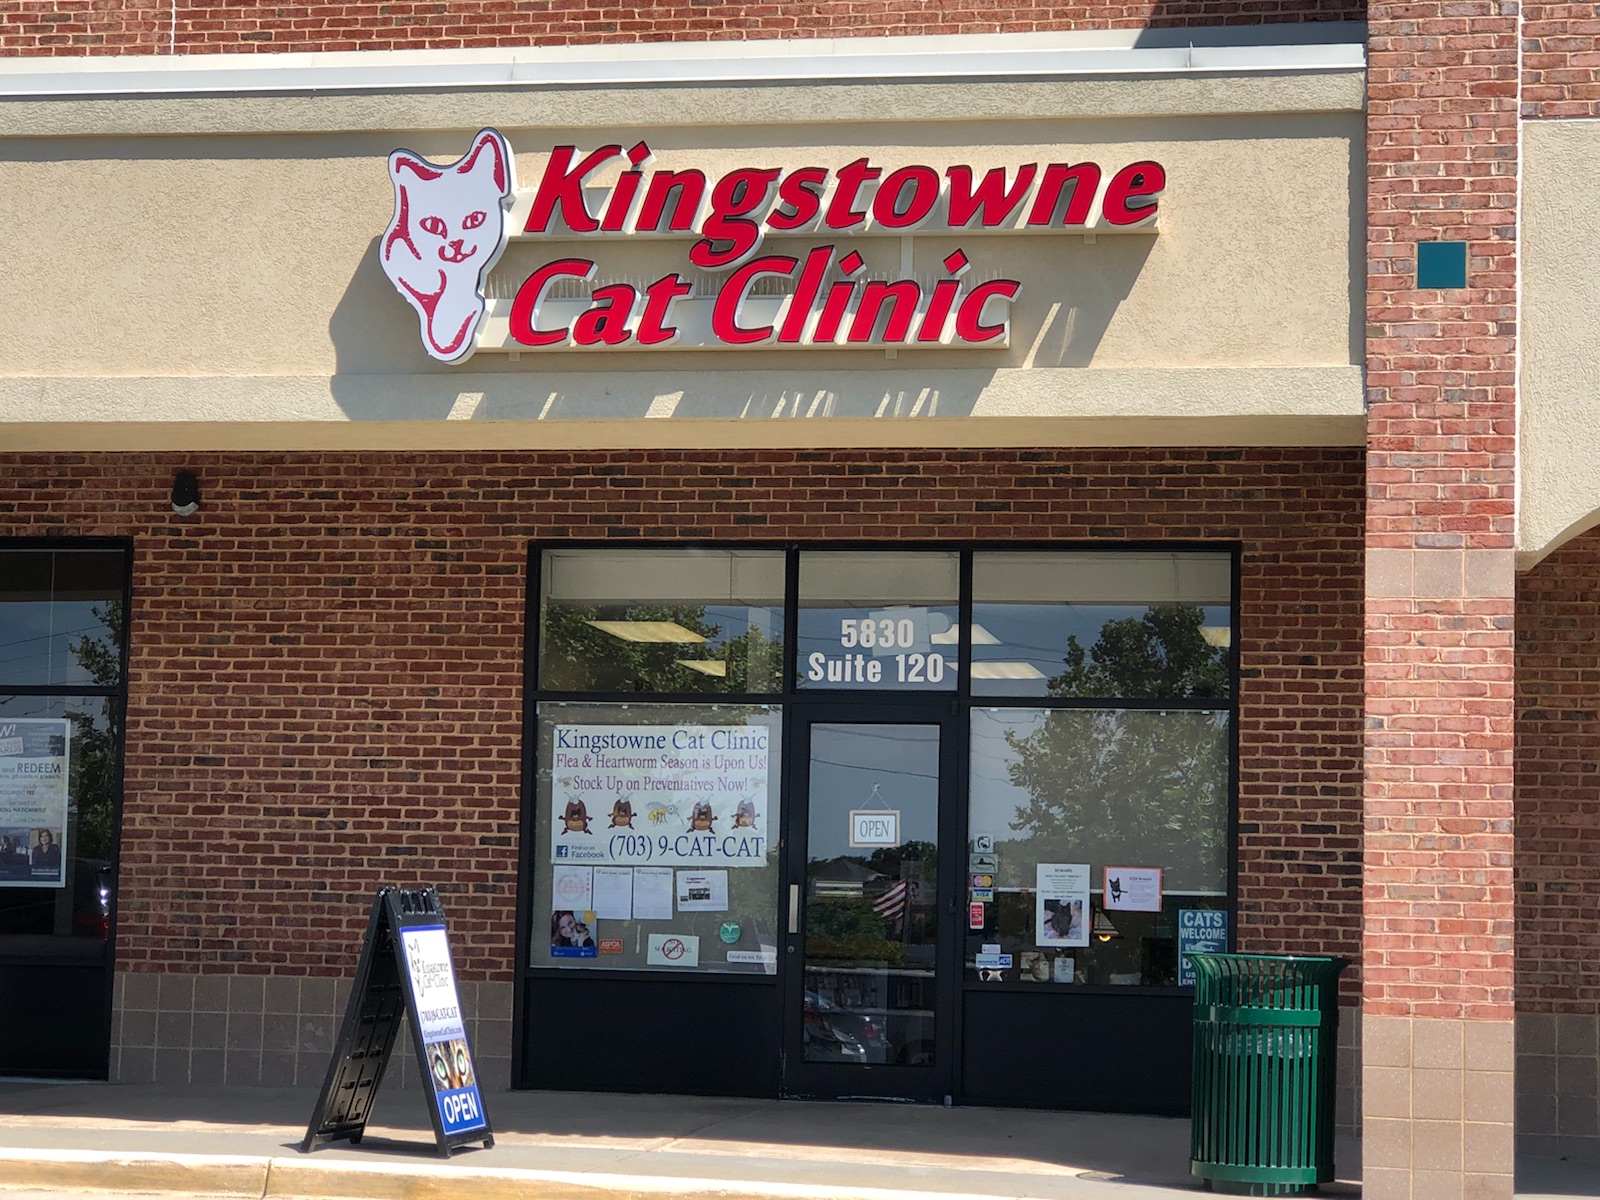 Gallery Kingstowne Cat Clinic